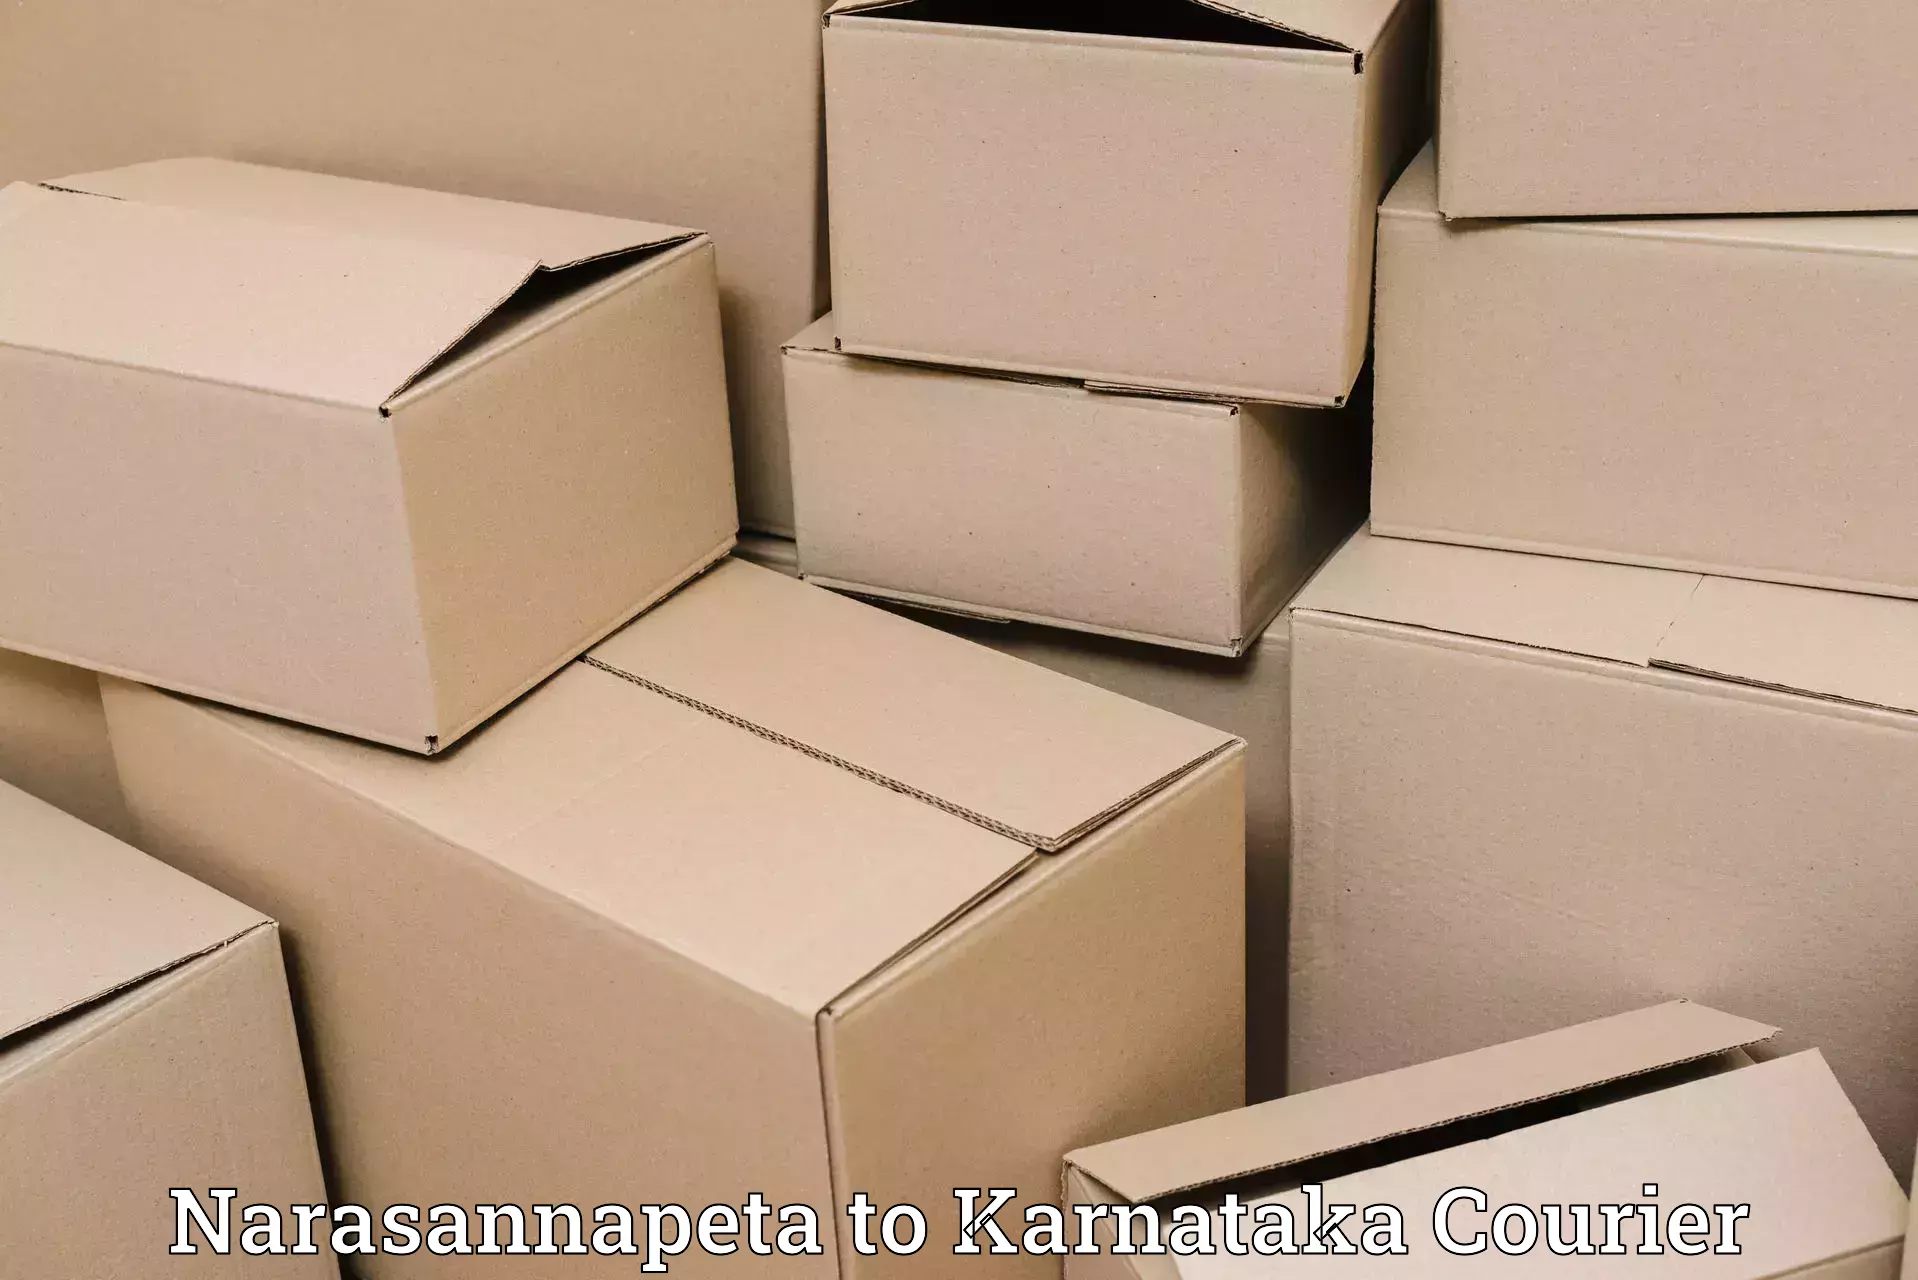 Online shipping calculator Narasannapeta to Karnataka